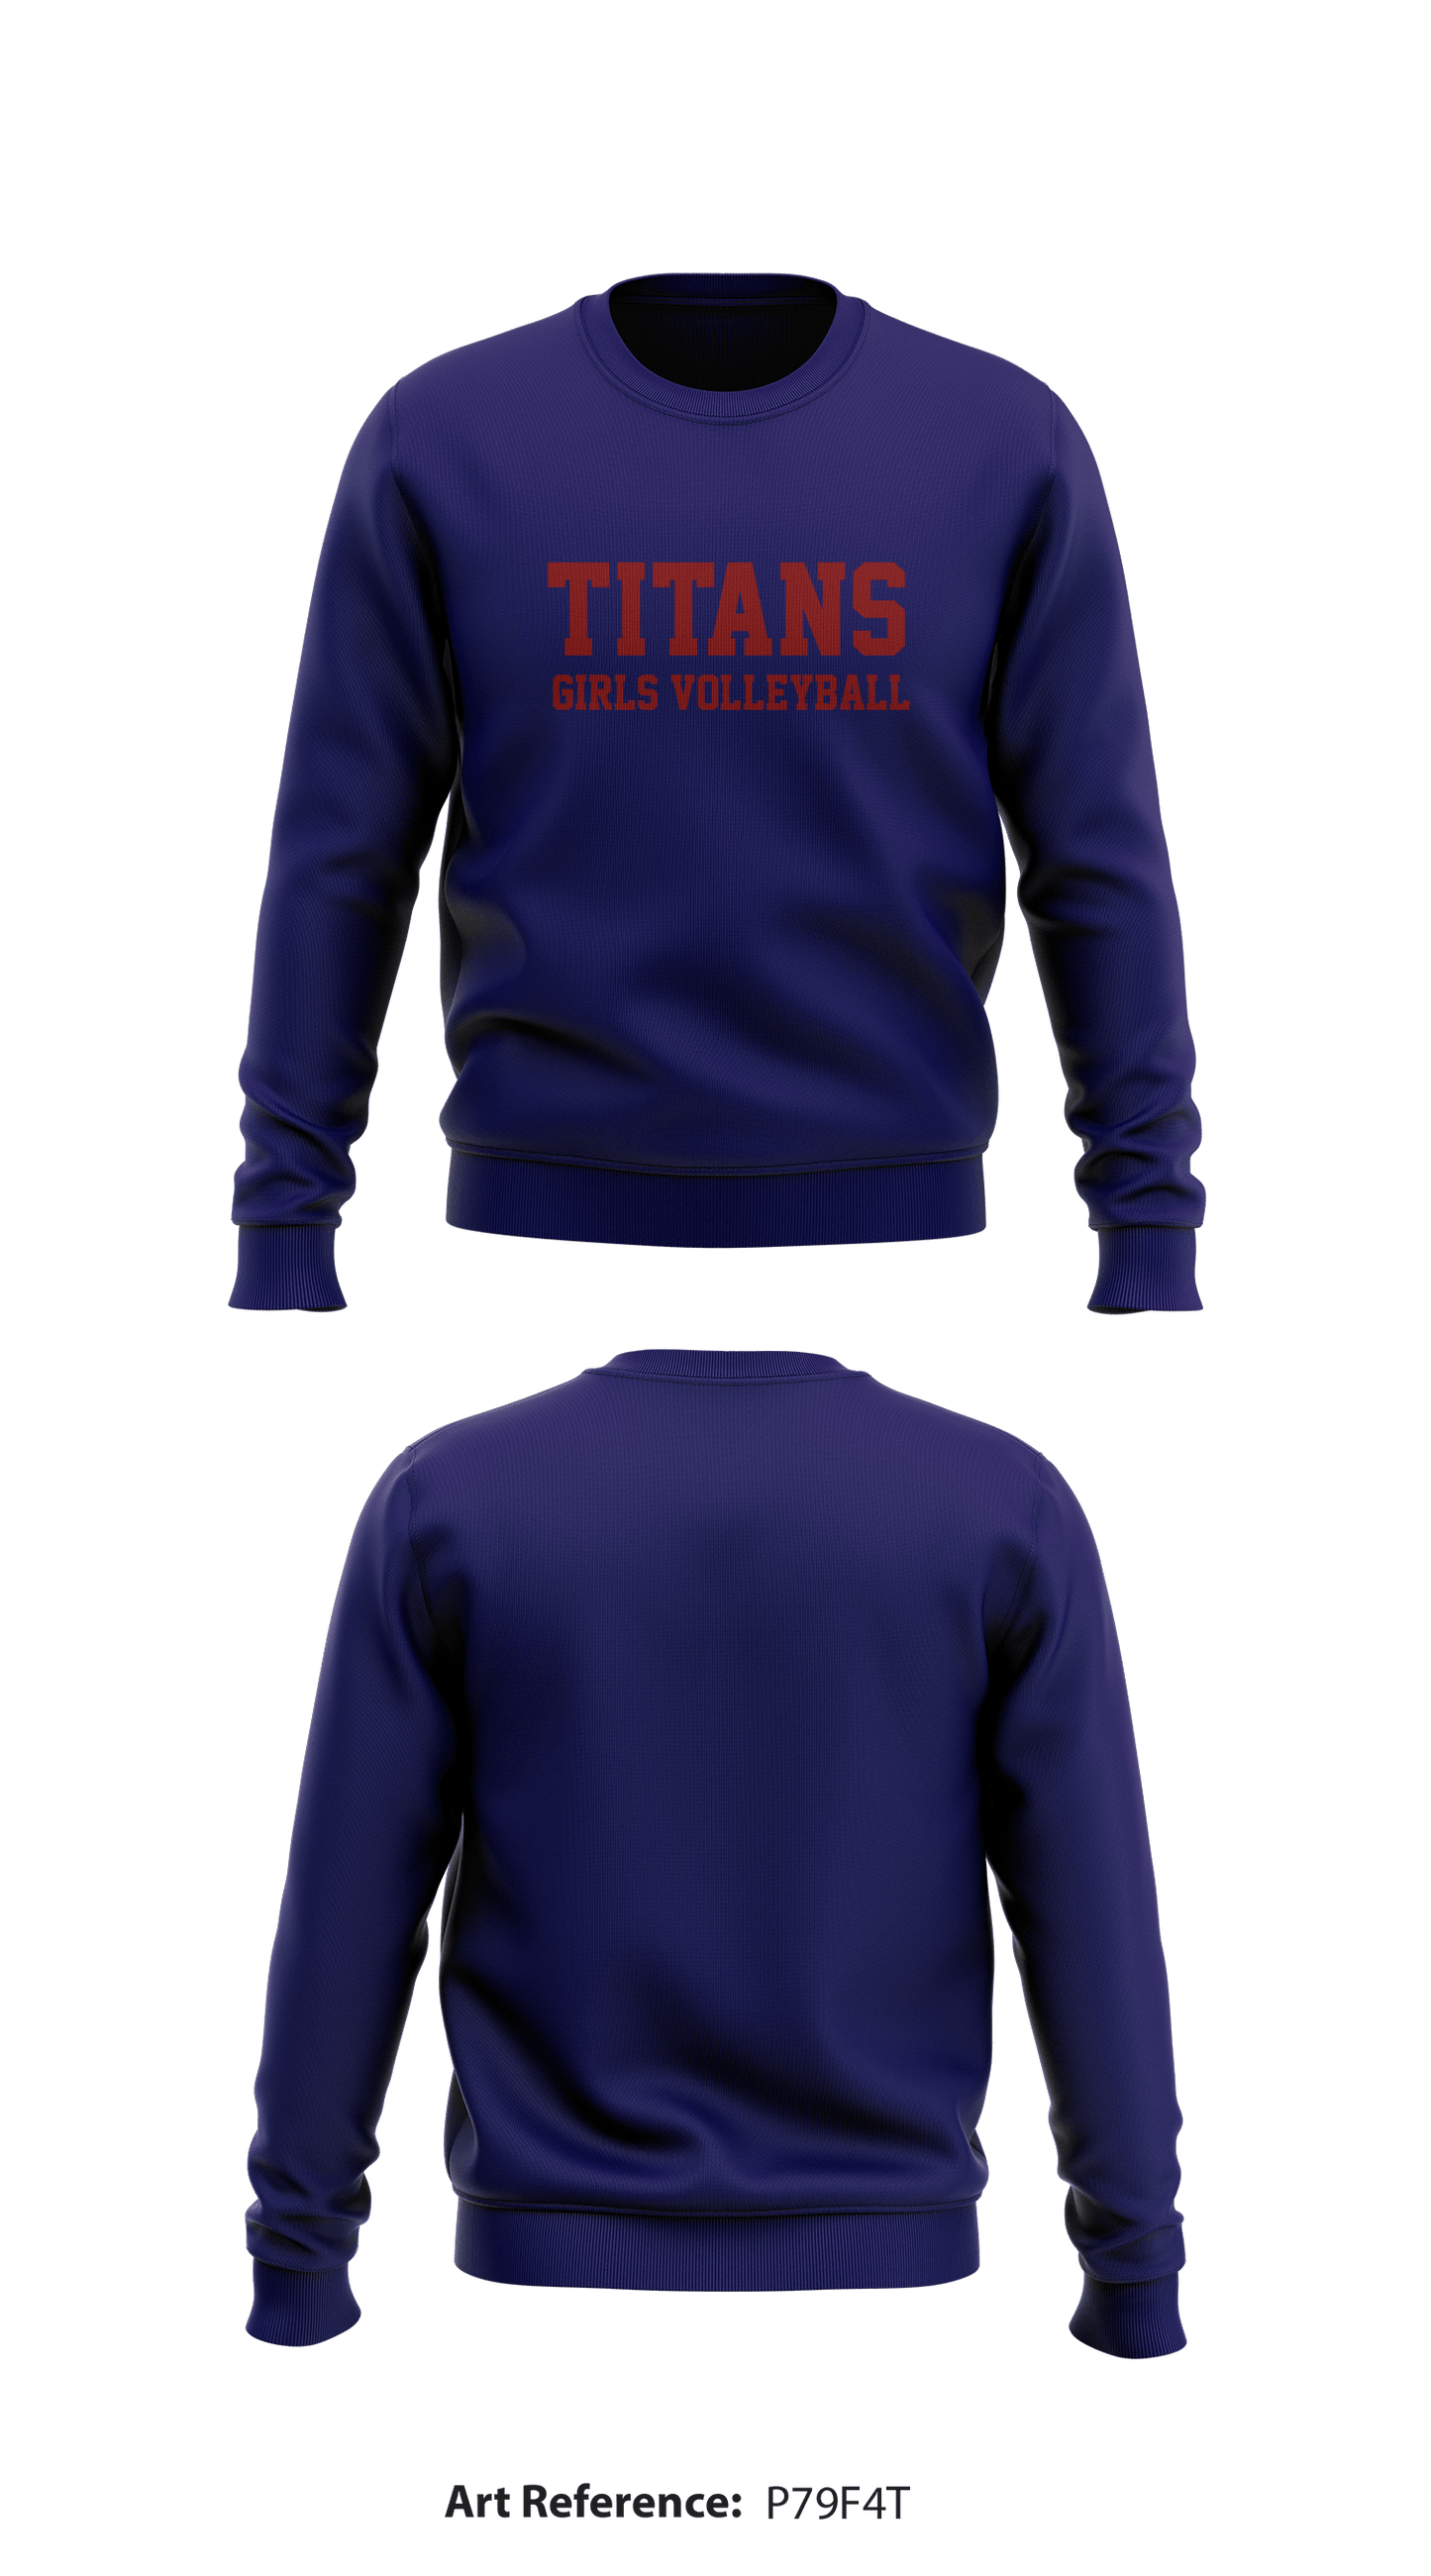 Titans Girls Volleyball Store 1 Core Men's Crewneck Performance Sweatshirt - P79F4T